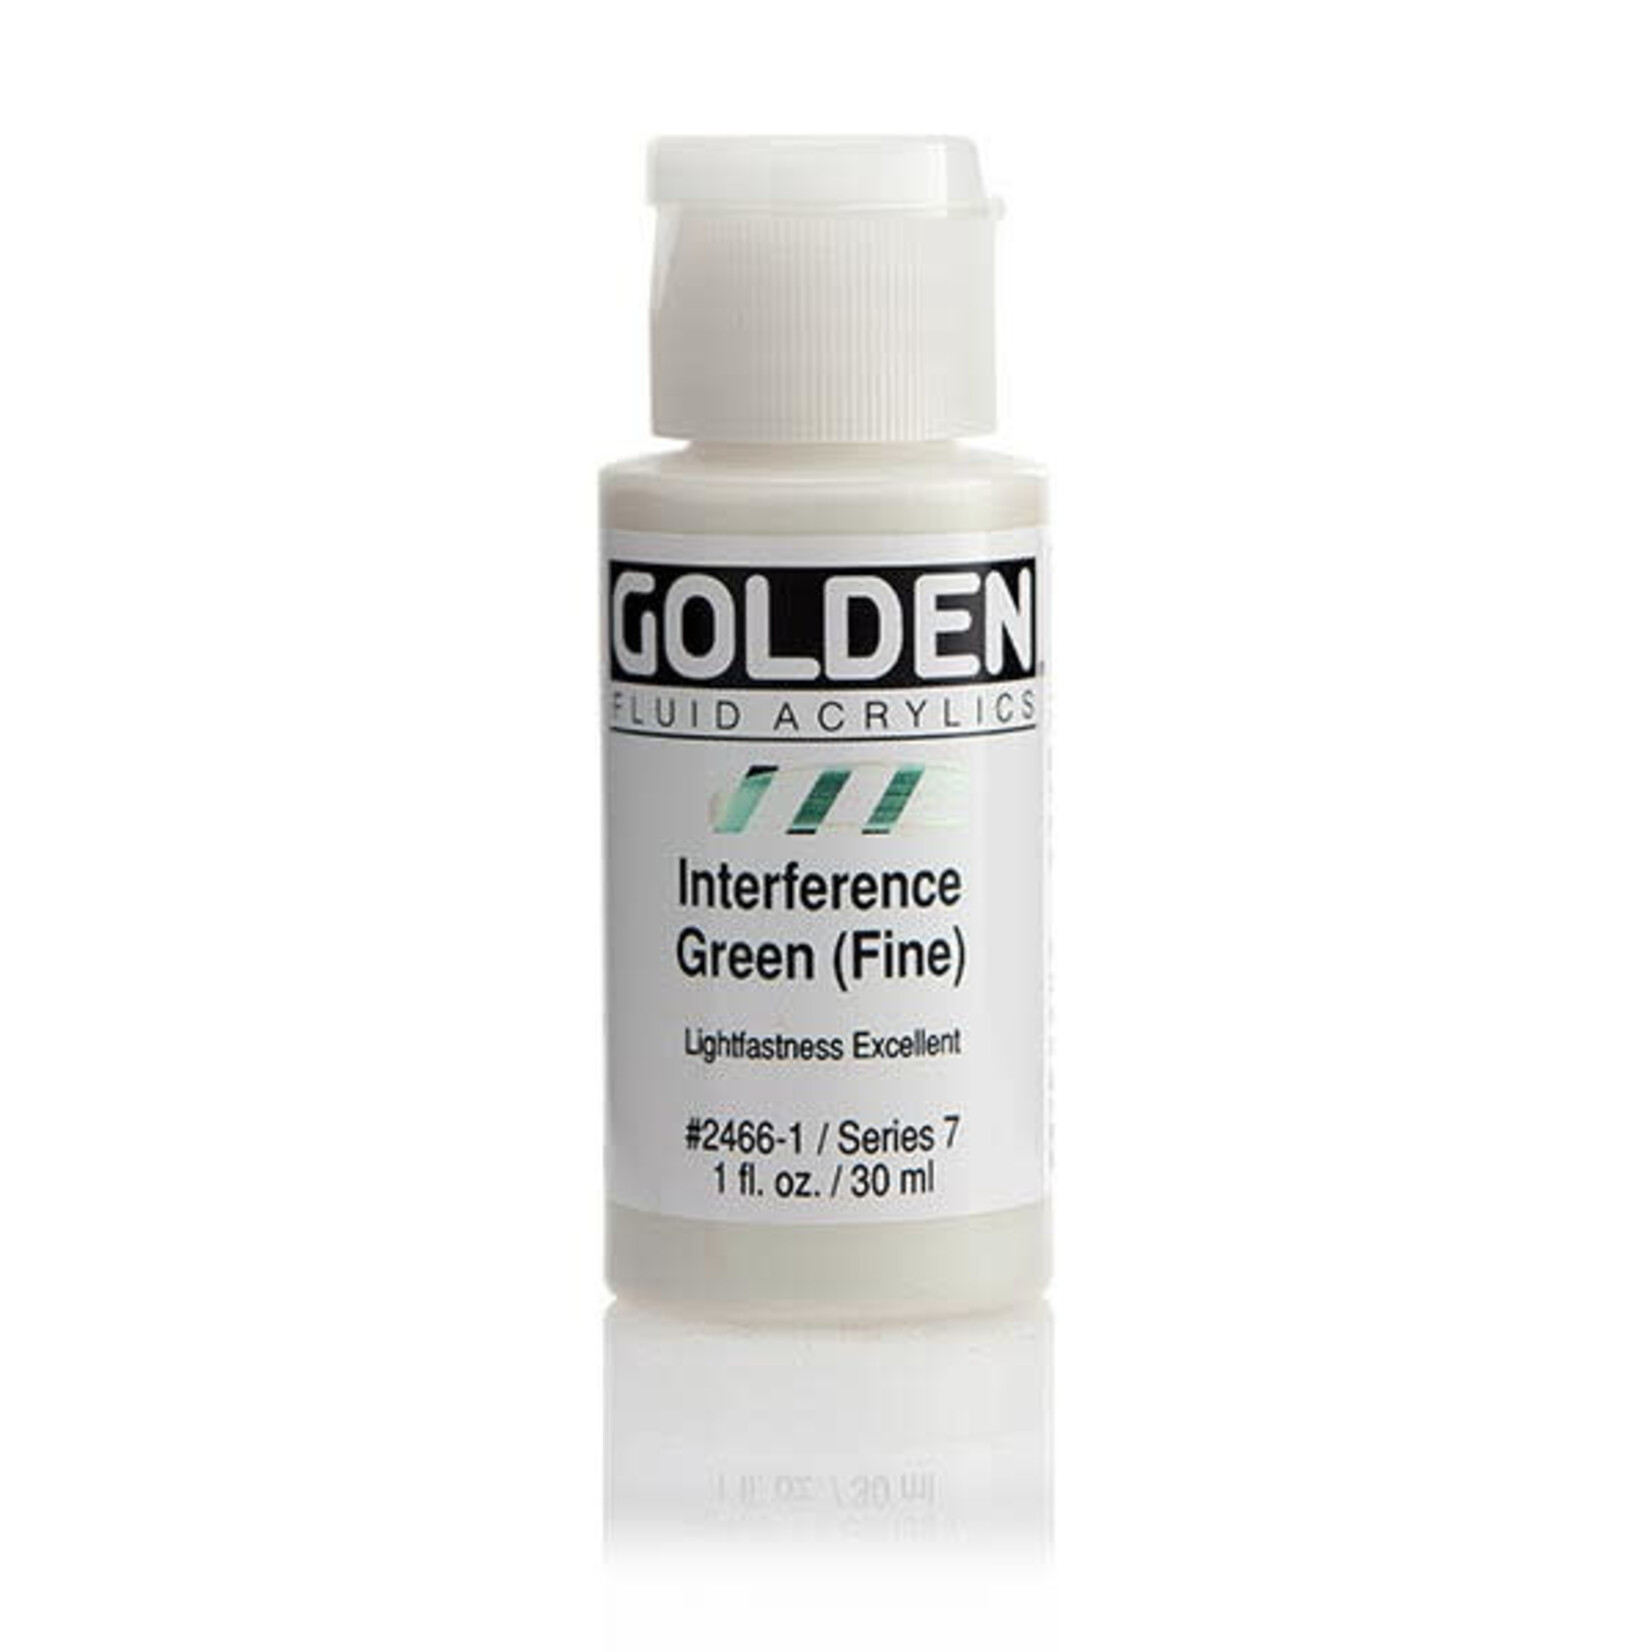 Golden Fluid Interference Green (fine) 1 oz Series 7